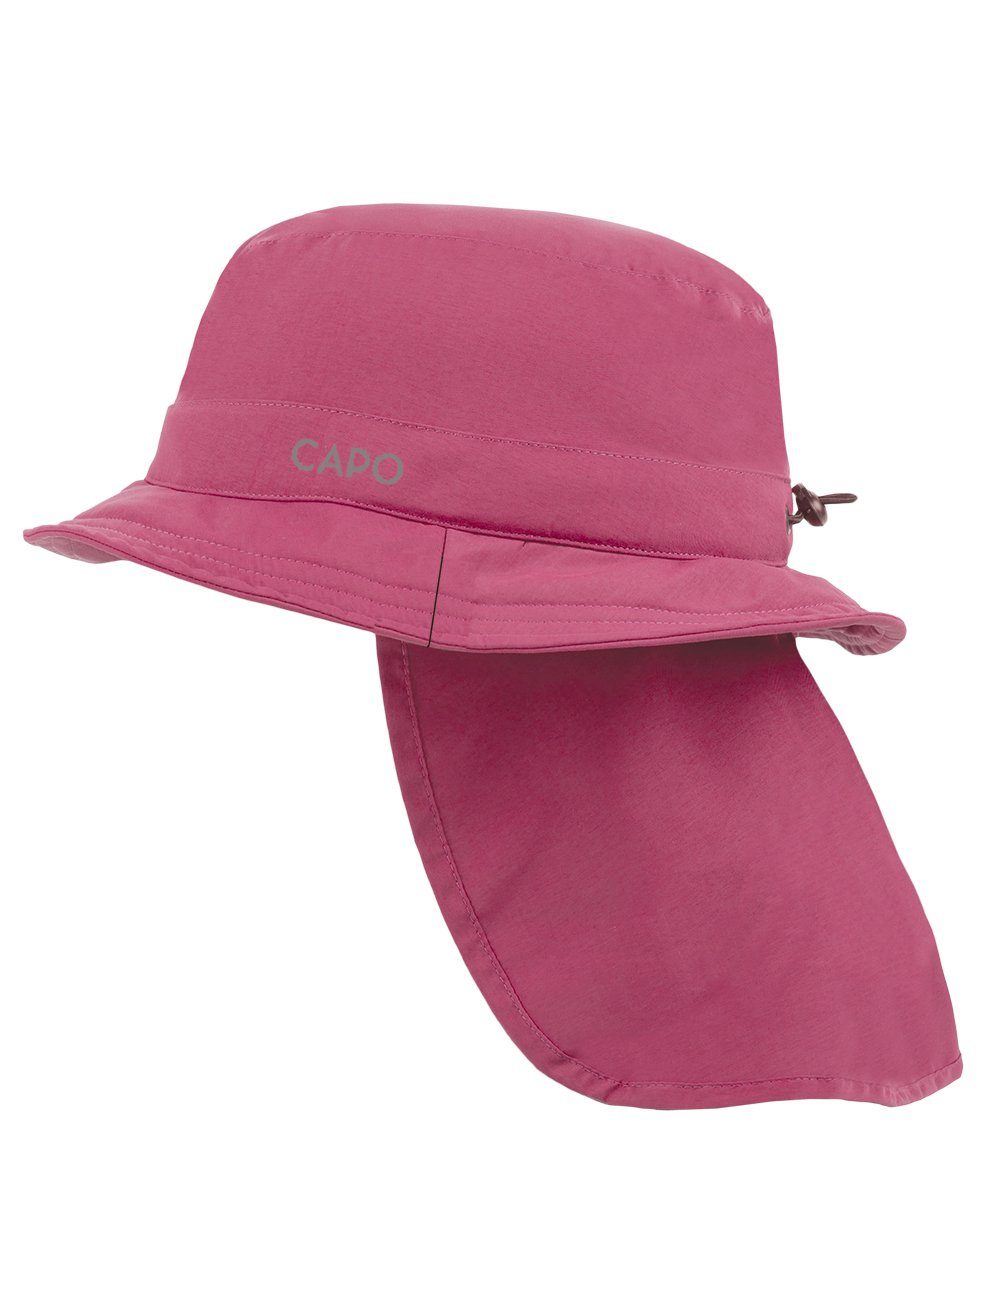 in HAT HIKING CAPO-LIGHT pink CAPO Sonnenhut Made Europe